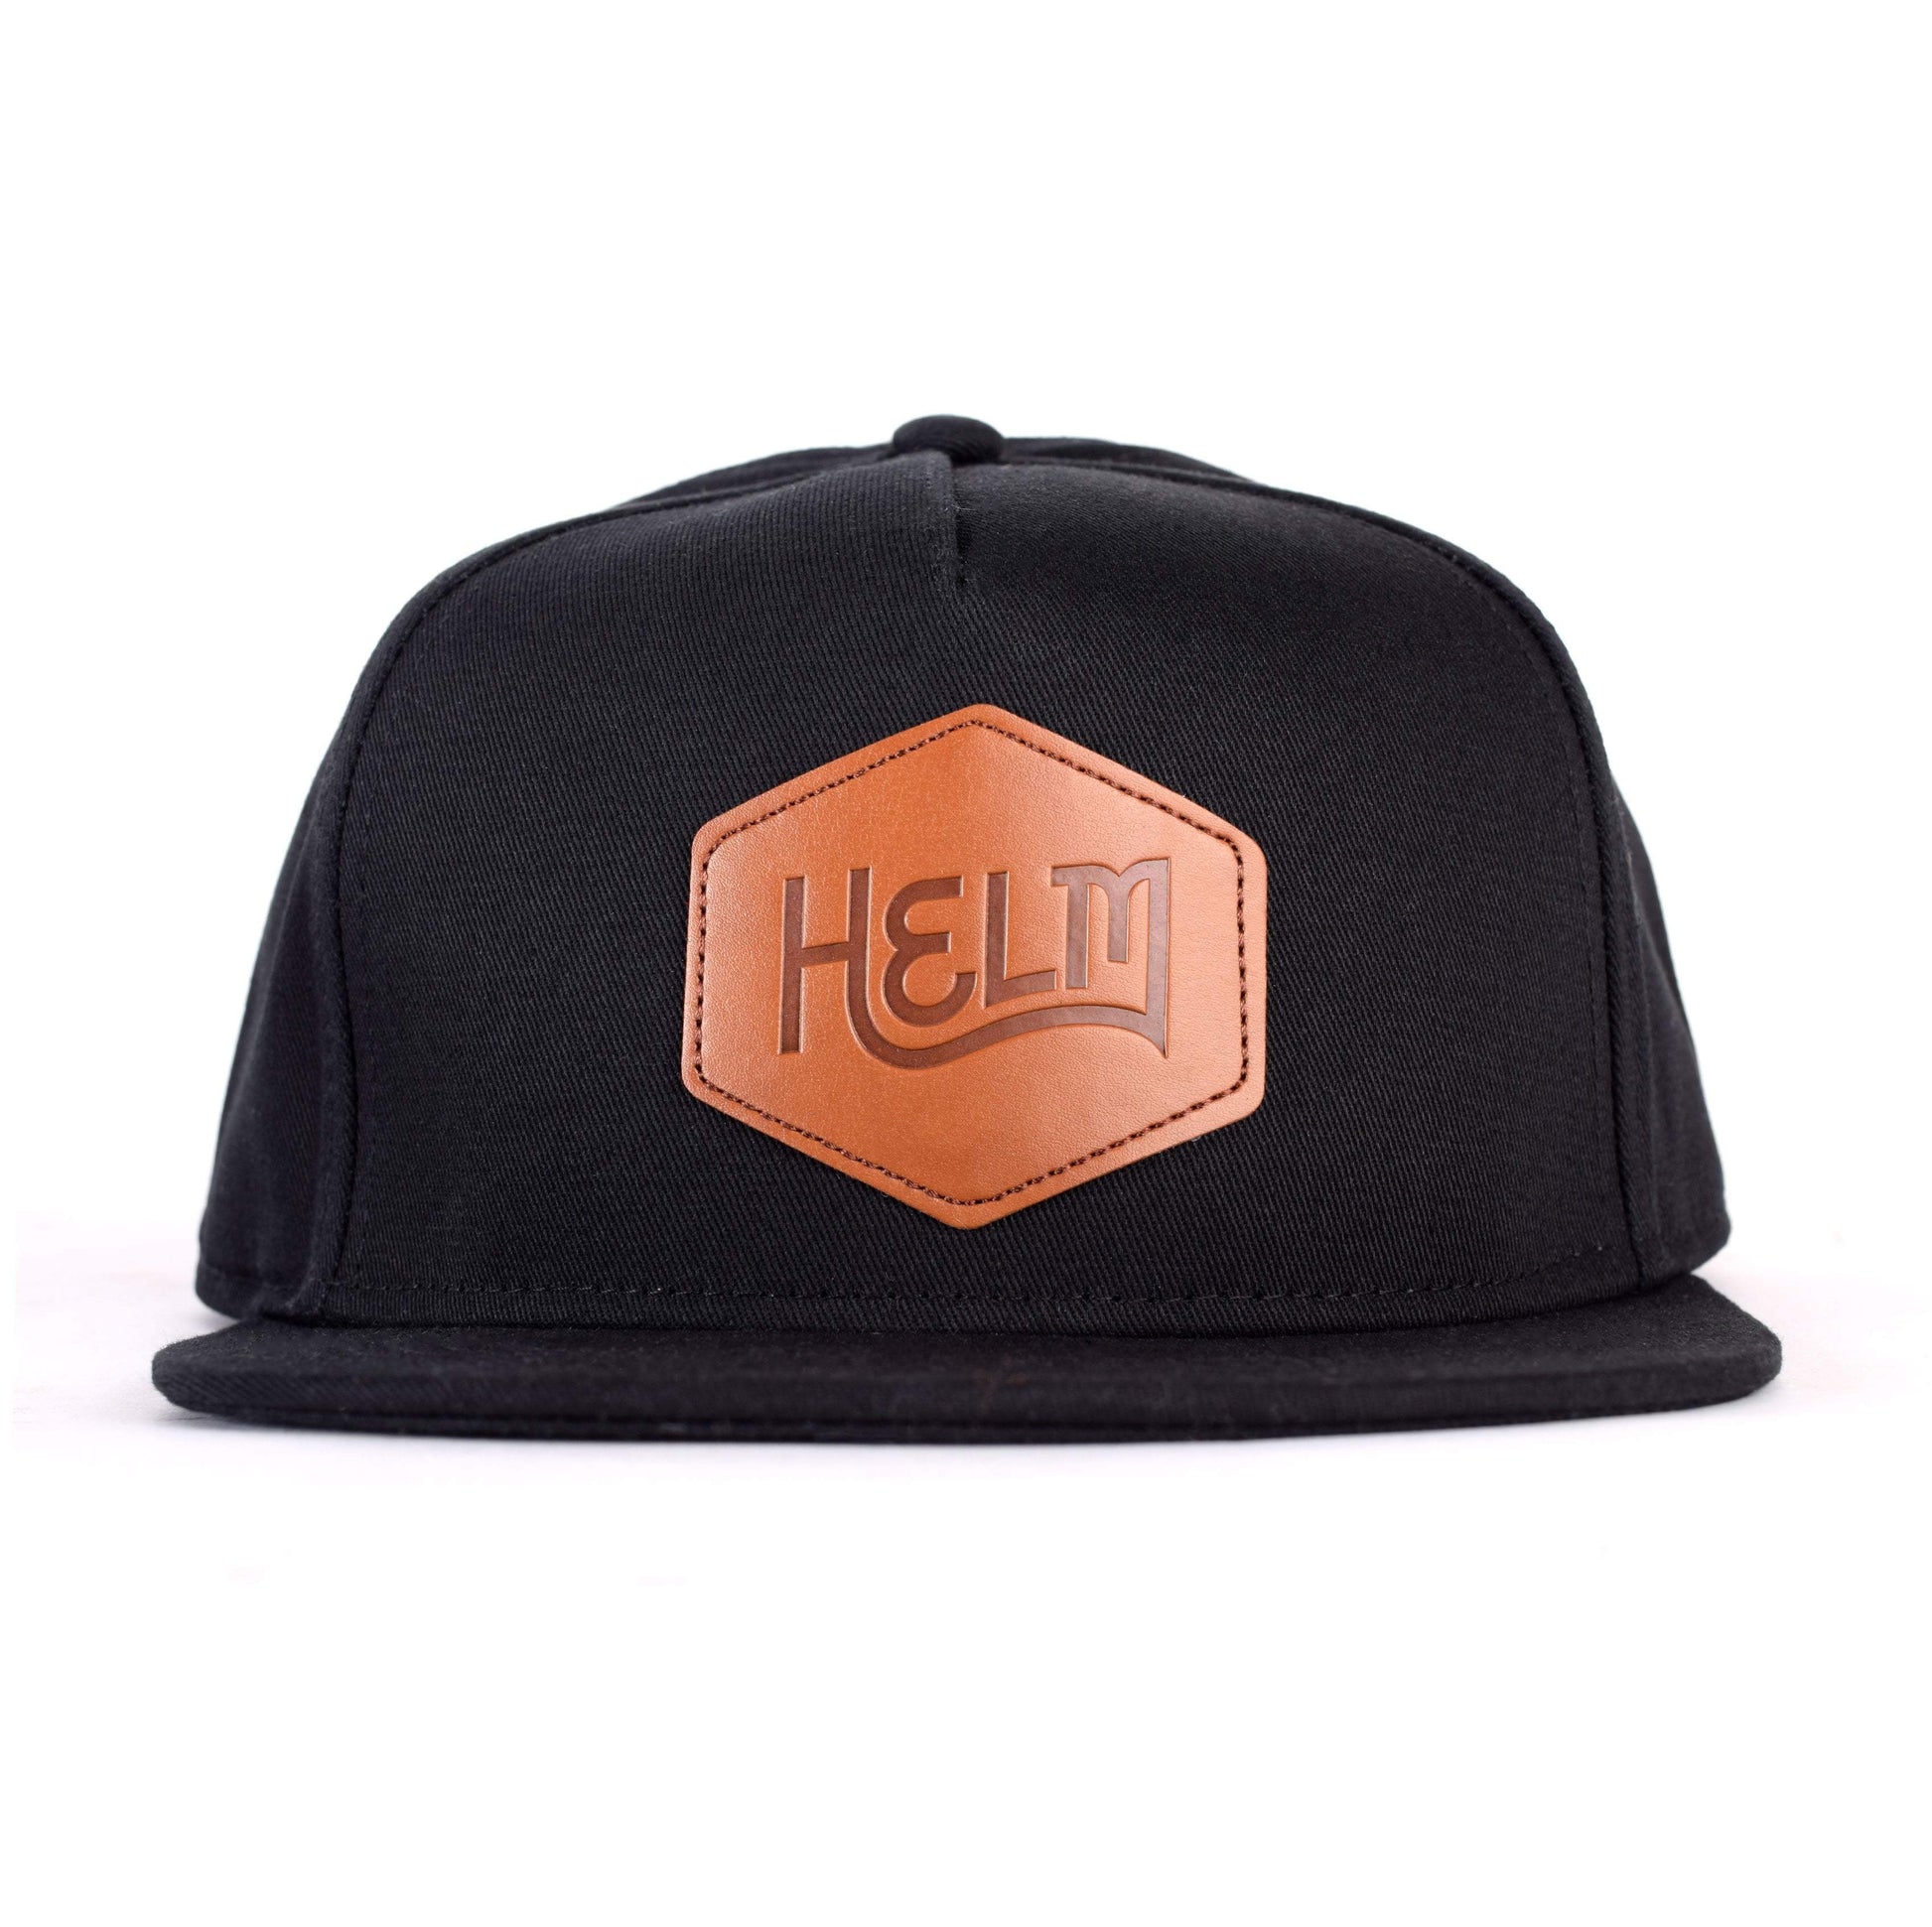 HELM Boots Accessories HELM Logo Cap - Black